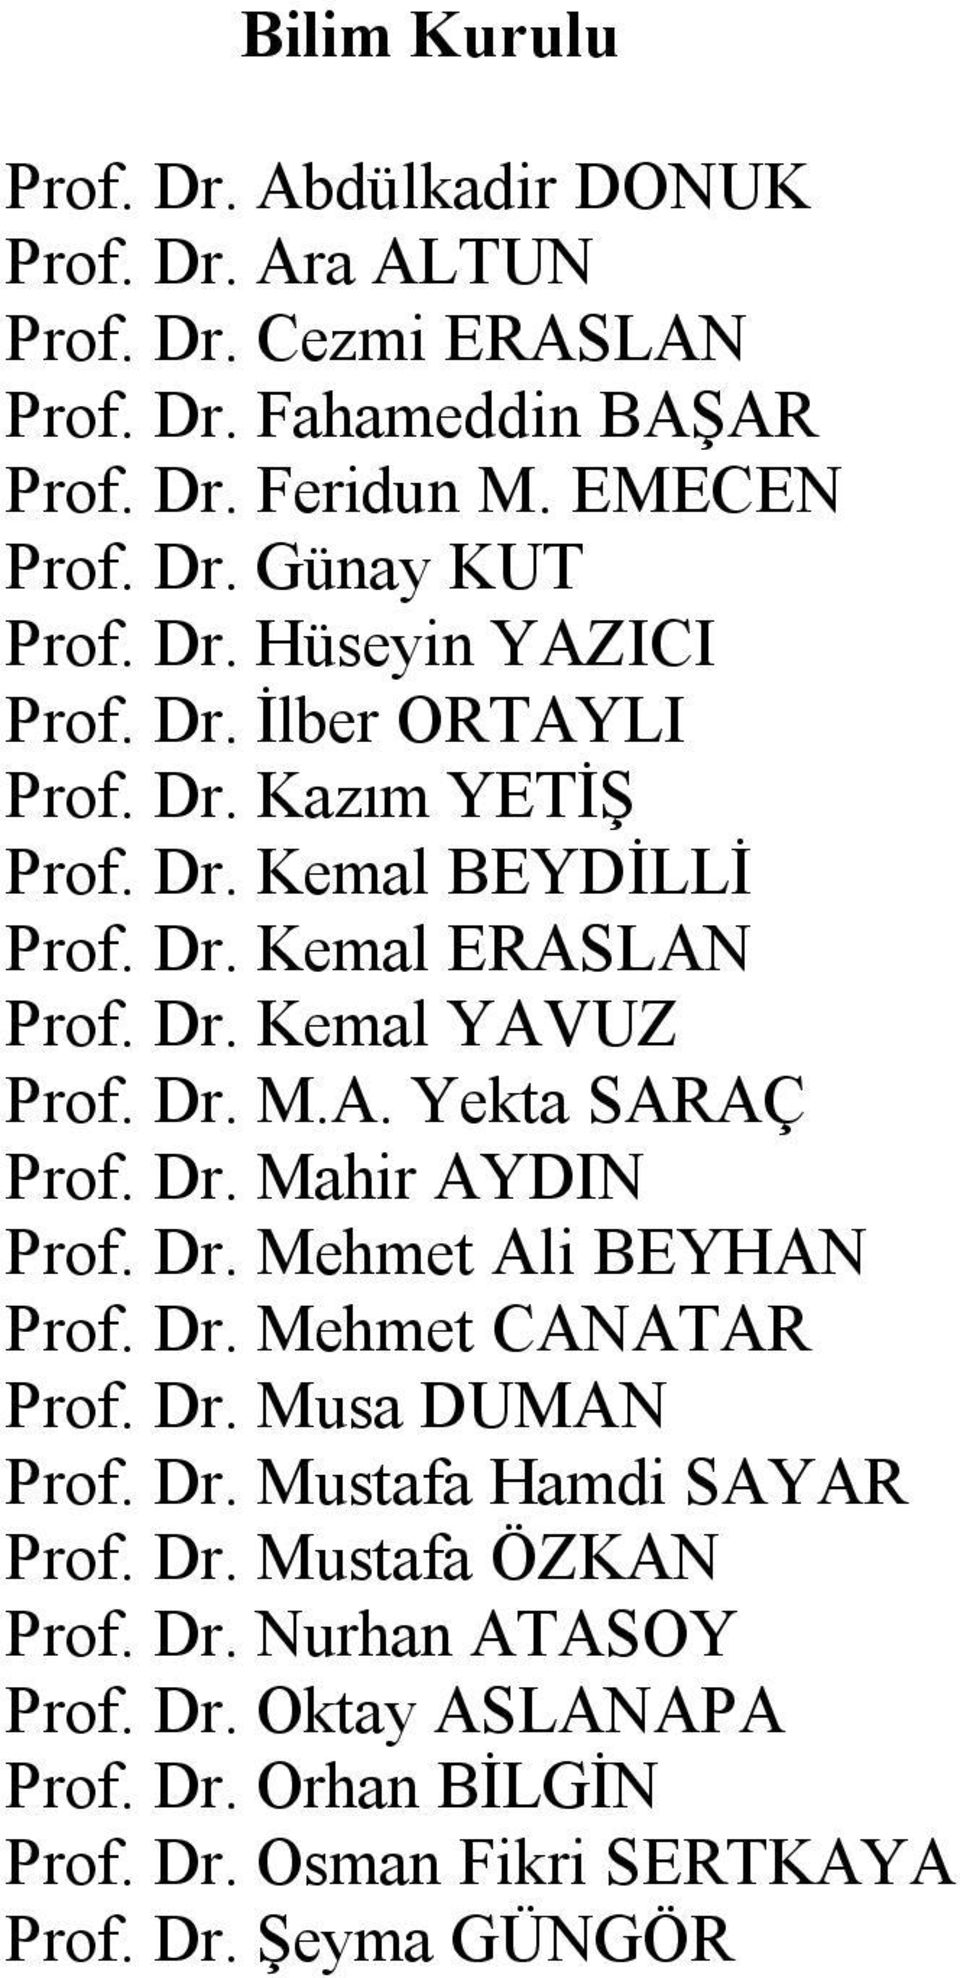 Dr. Mahir AYDIN Prof. Dr. Mehmet Ali BEYHAN Prof. Dr. Mehmet CANATAR Prof. Dr. Musa DUMAN Prof. Dr. Mustafa Hamdi SAYAR Prof. Dr. Mustafa ÖZKAN Prof.